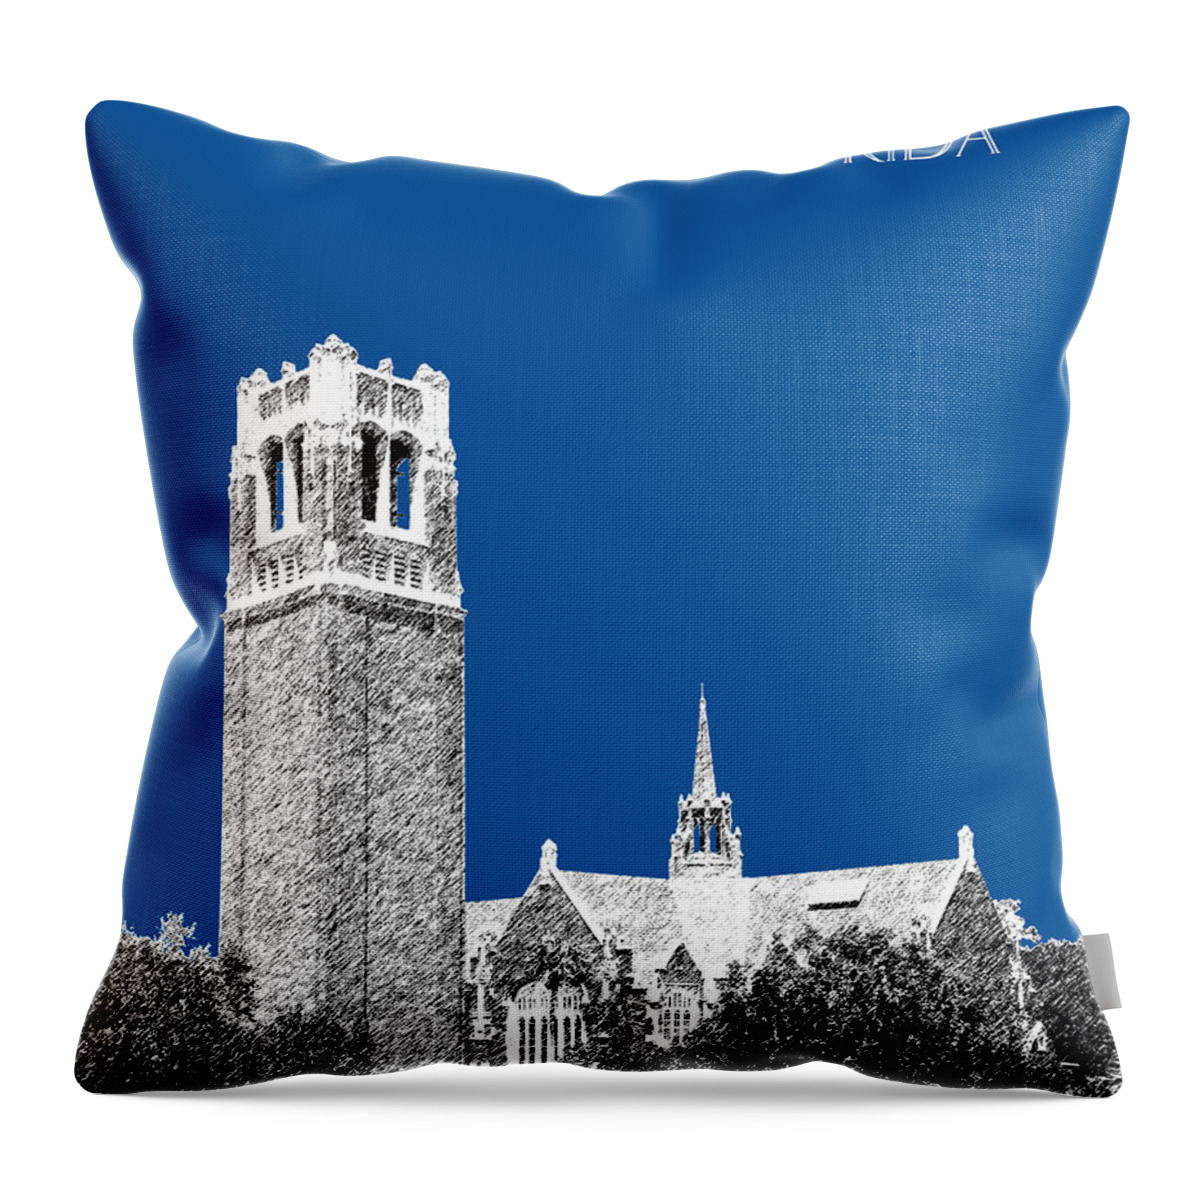 University Throw Pillow featuring the digital art University of Florida - Royal Blue by DB Artist